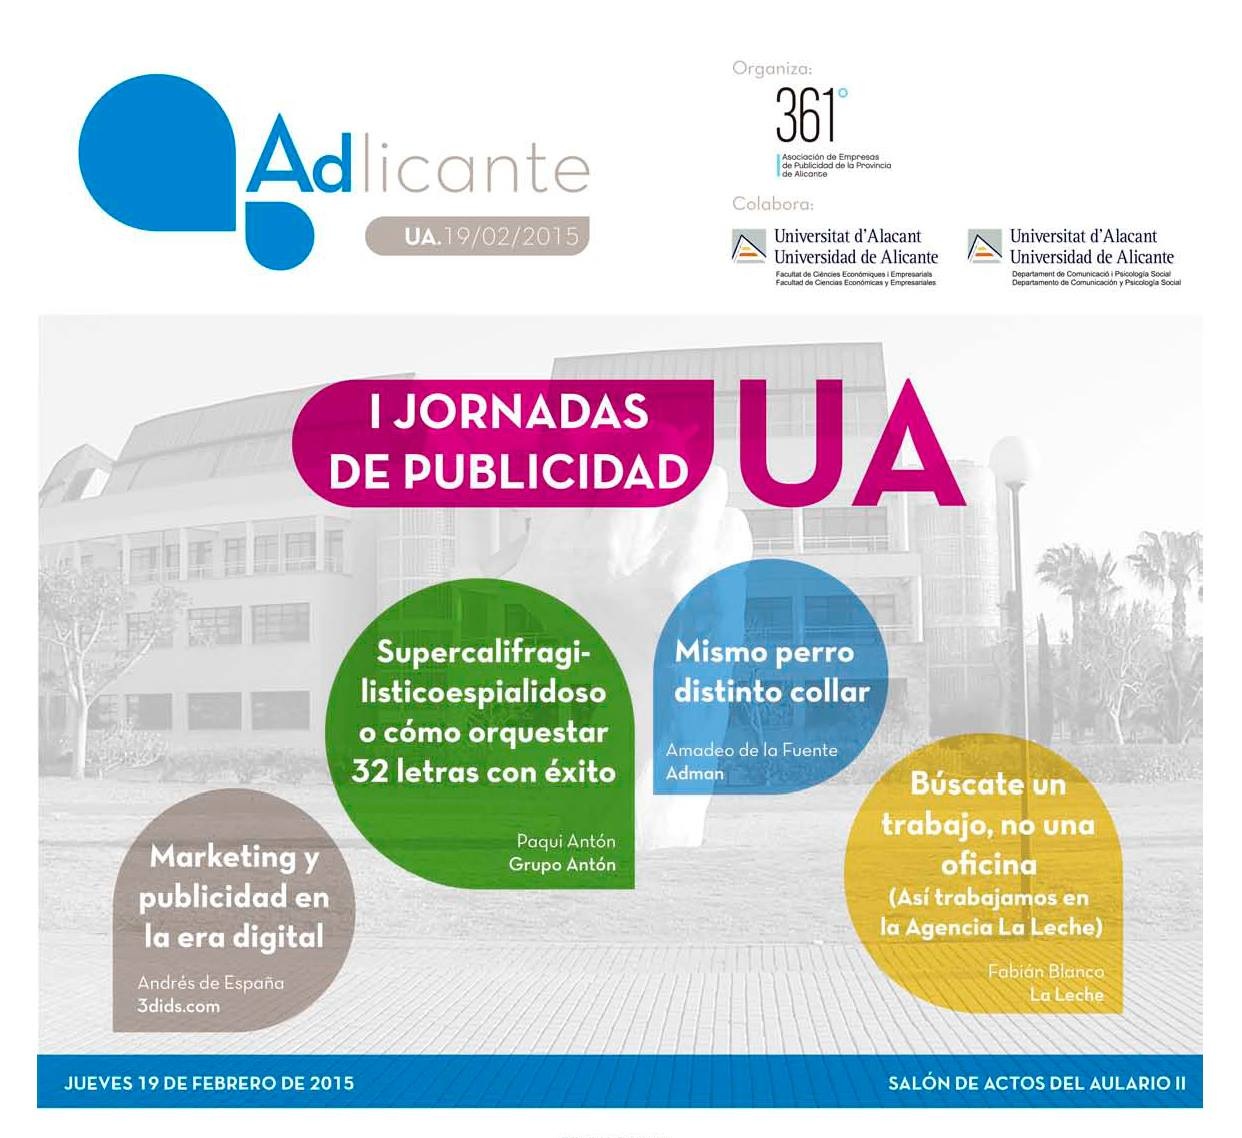 Adlicante, I Jornadas de publicidad UA